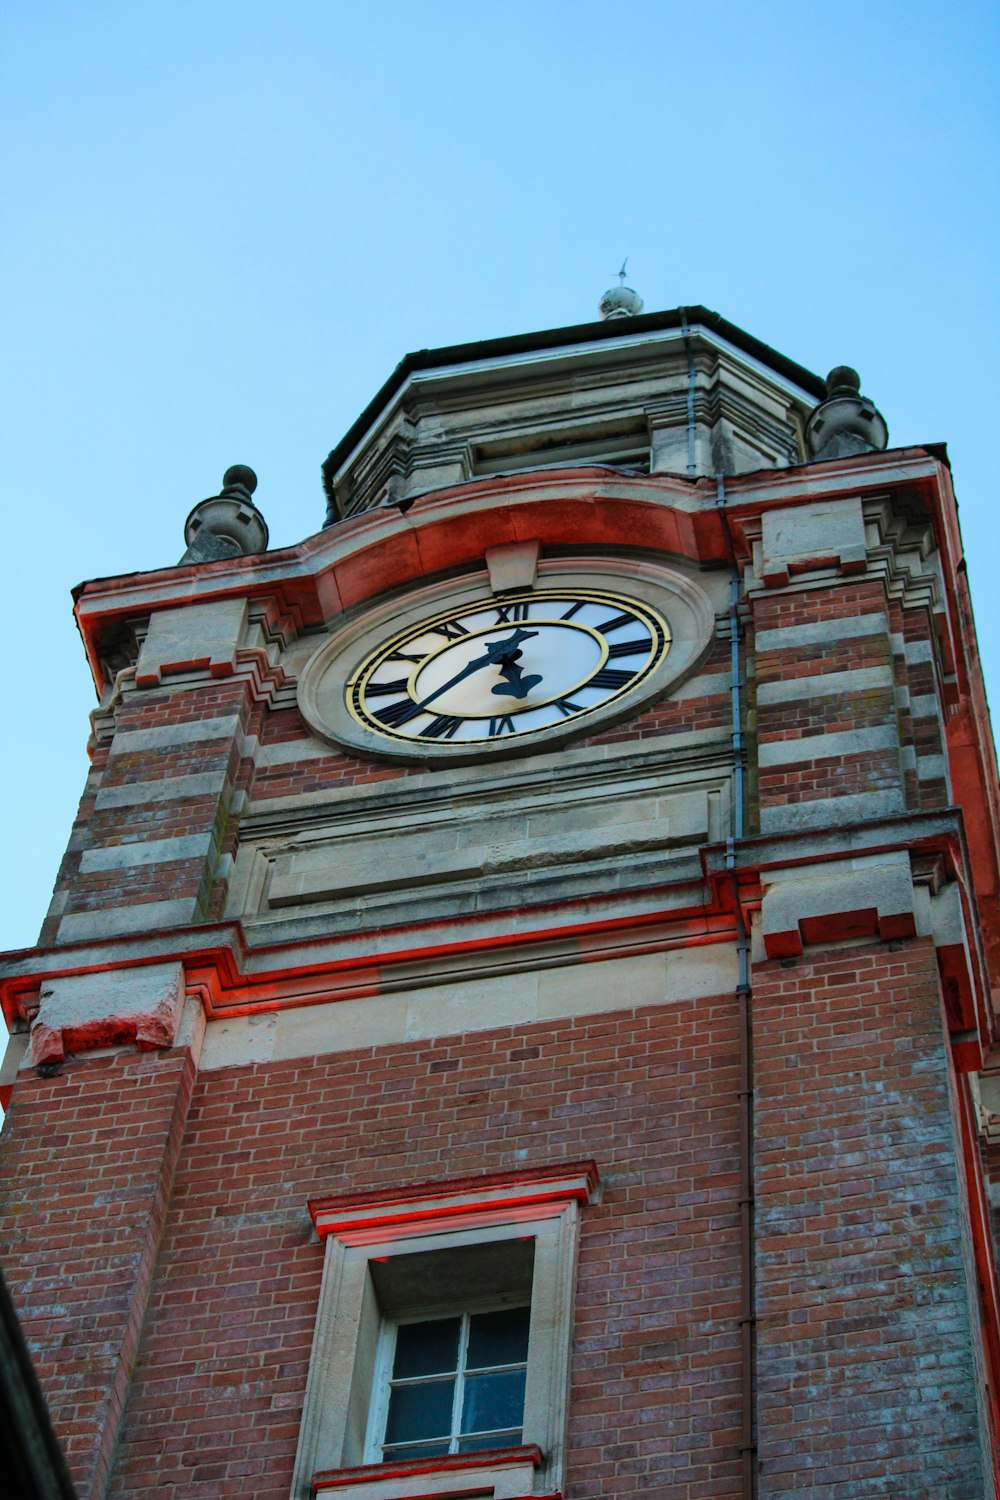 a clock on a brick building